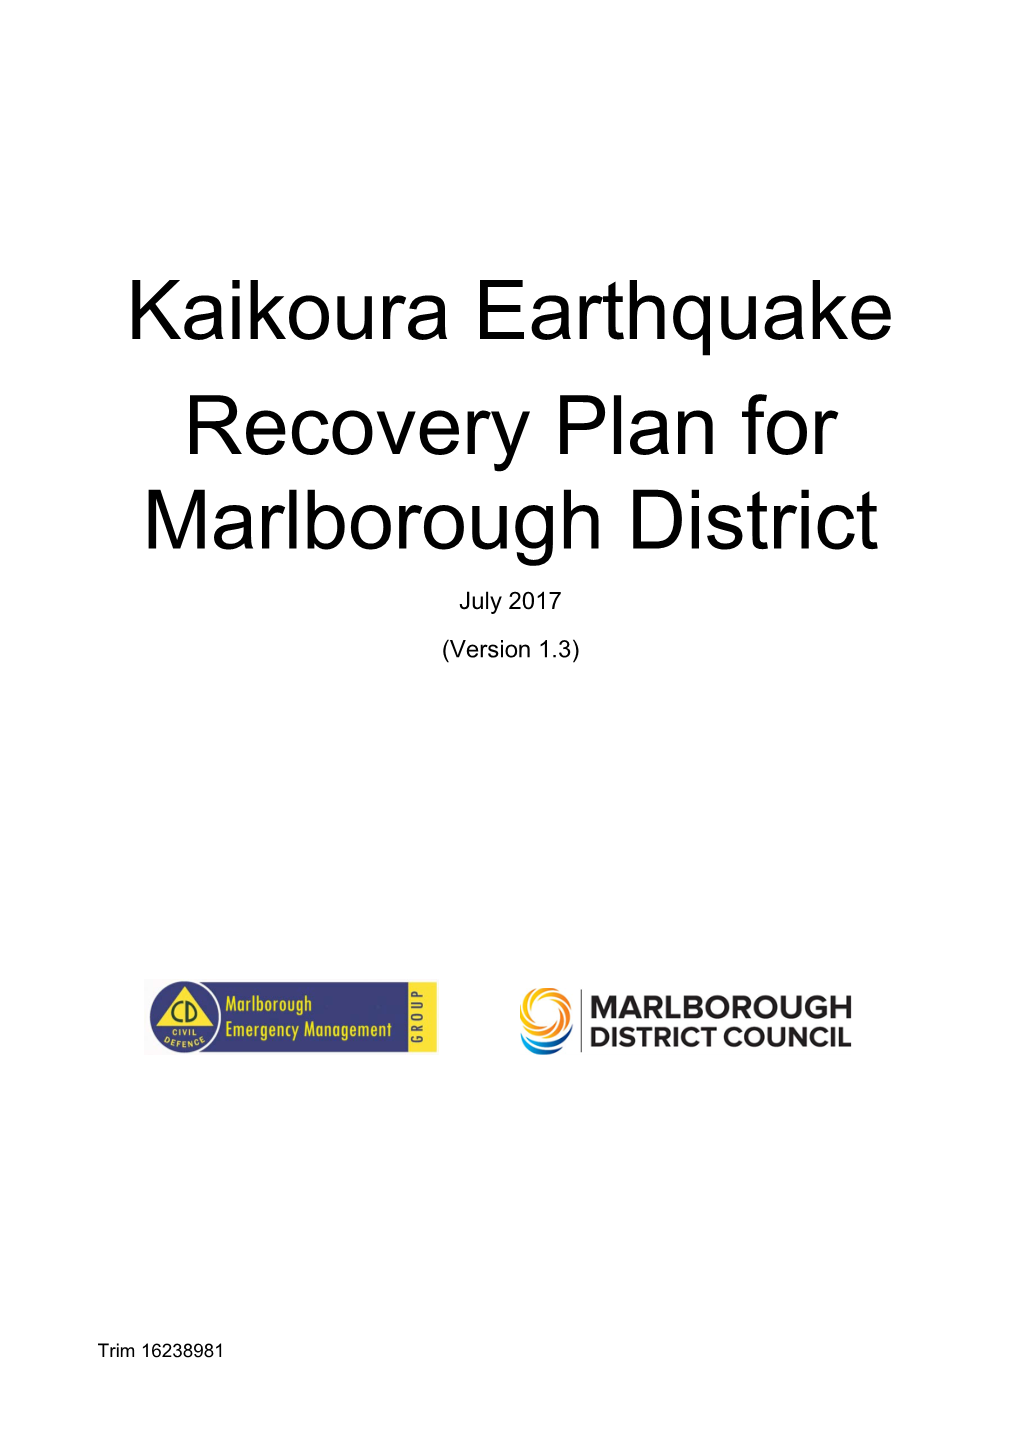 Kaikoura Earthquake Recovery Plan for Marlborough District July 2017